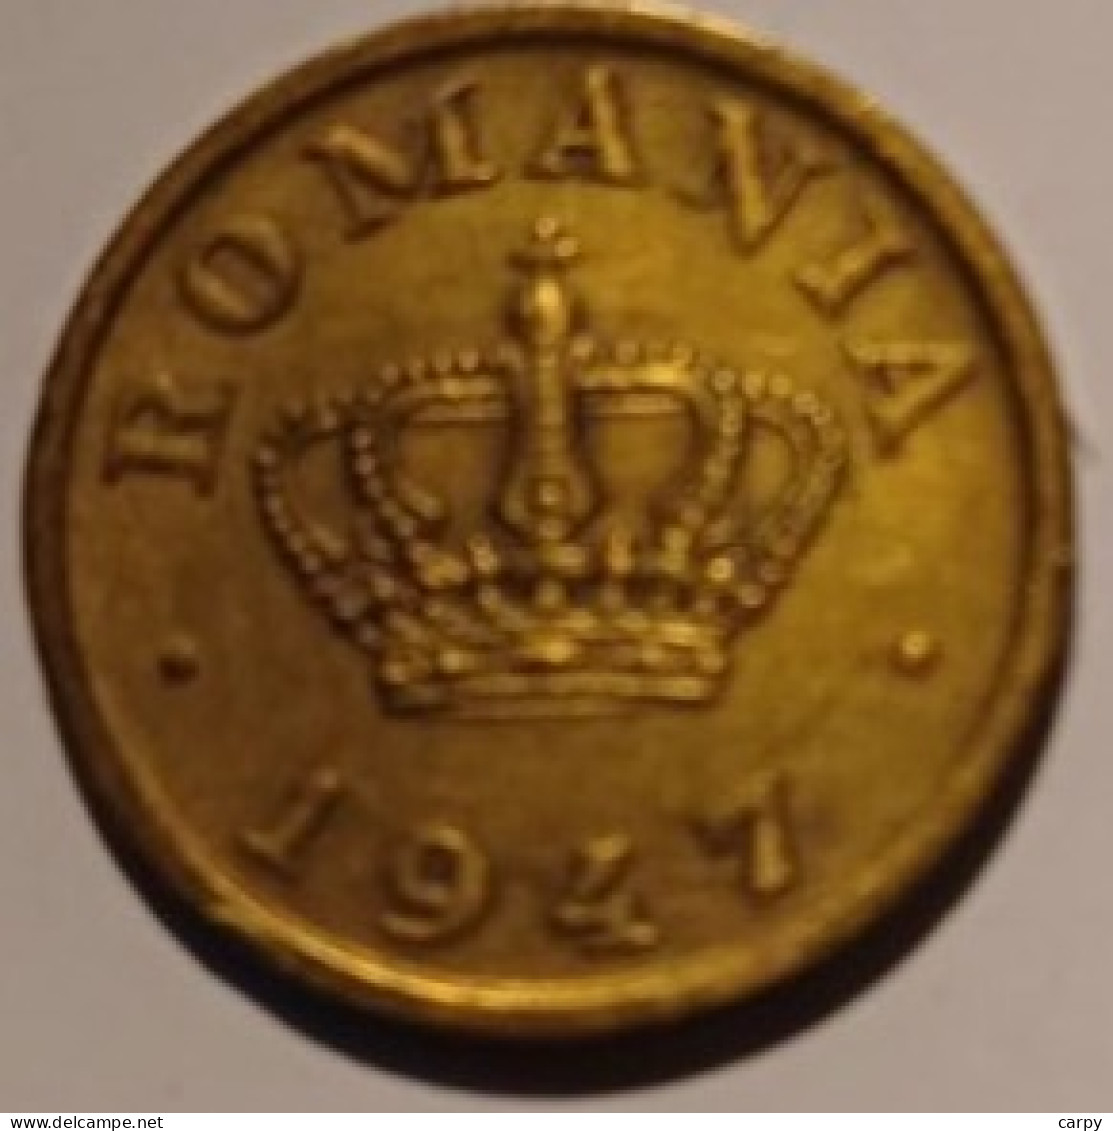 ROMANIA 50 Bani 1947 / King Michael I / Very Nice Looking / RARE - Rumania